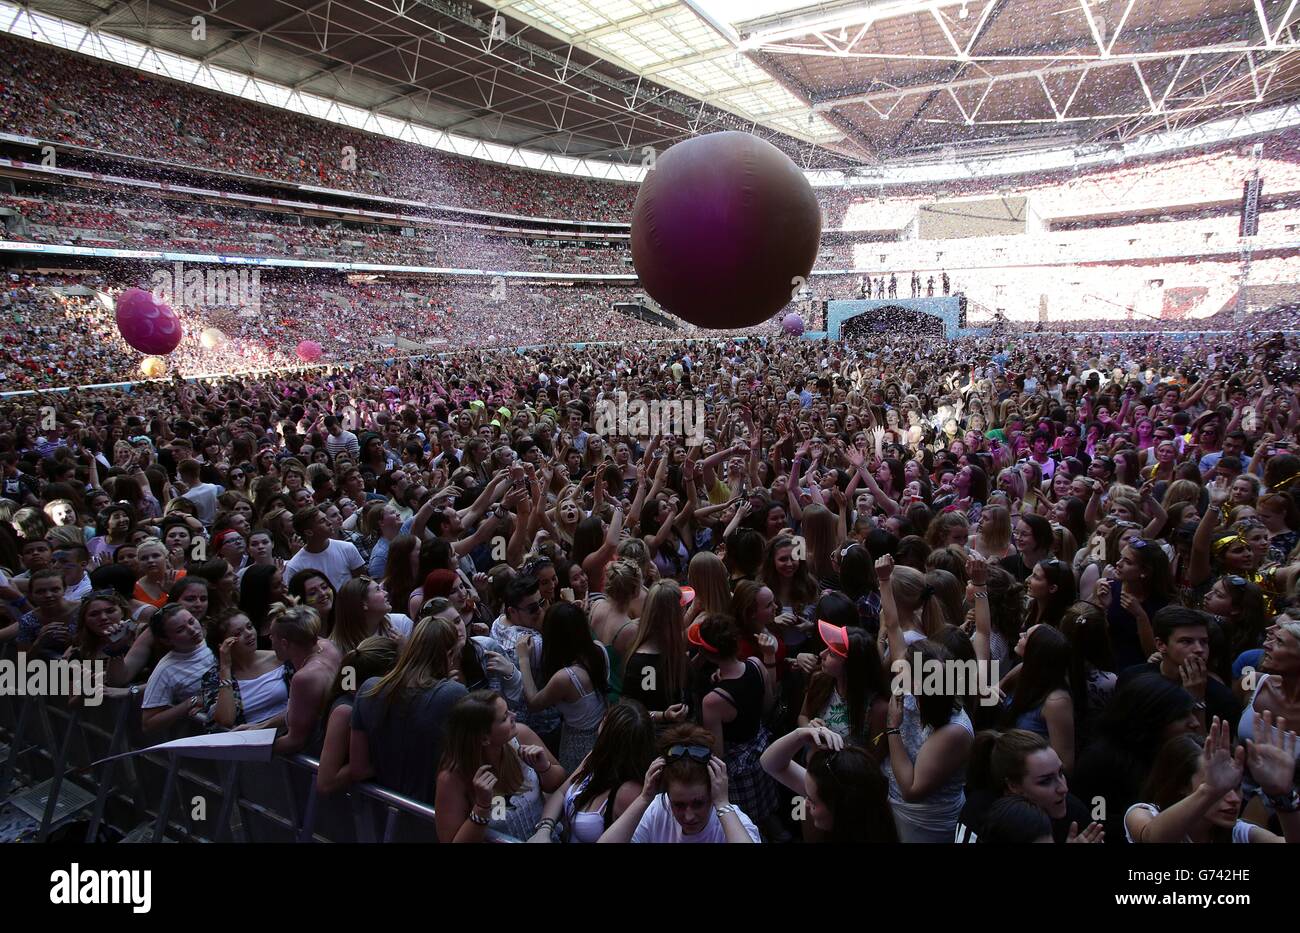 Capital FM Summertime Ball - London. Beim Summertime Ball von Capital FM im  Wembley Stadium, London, werden riesige Inflatables über die Menge  aufgezogen Stockfotografie - Alamy